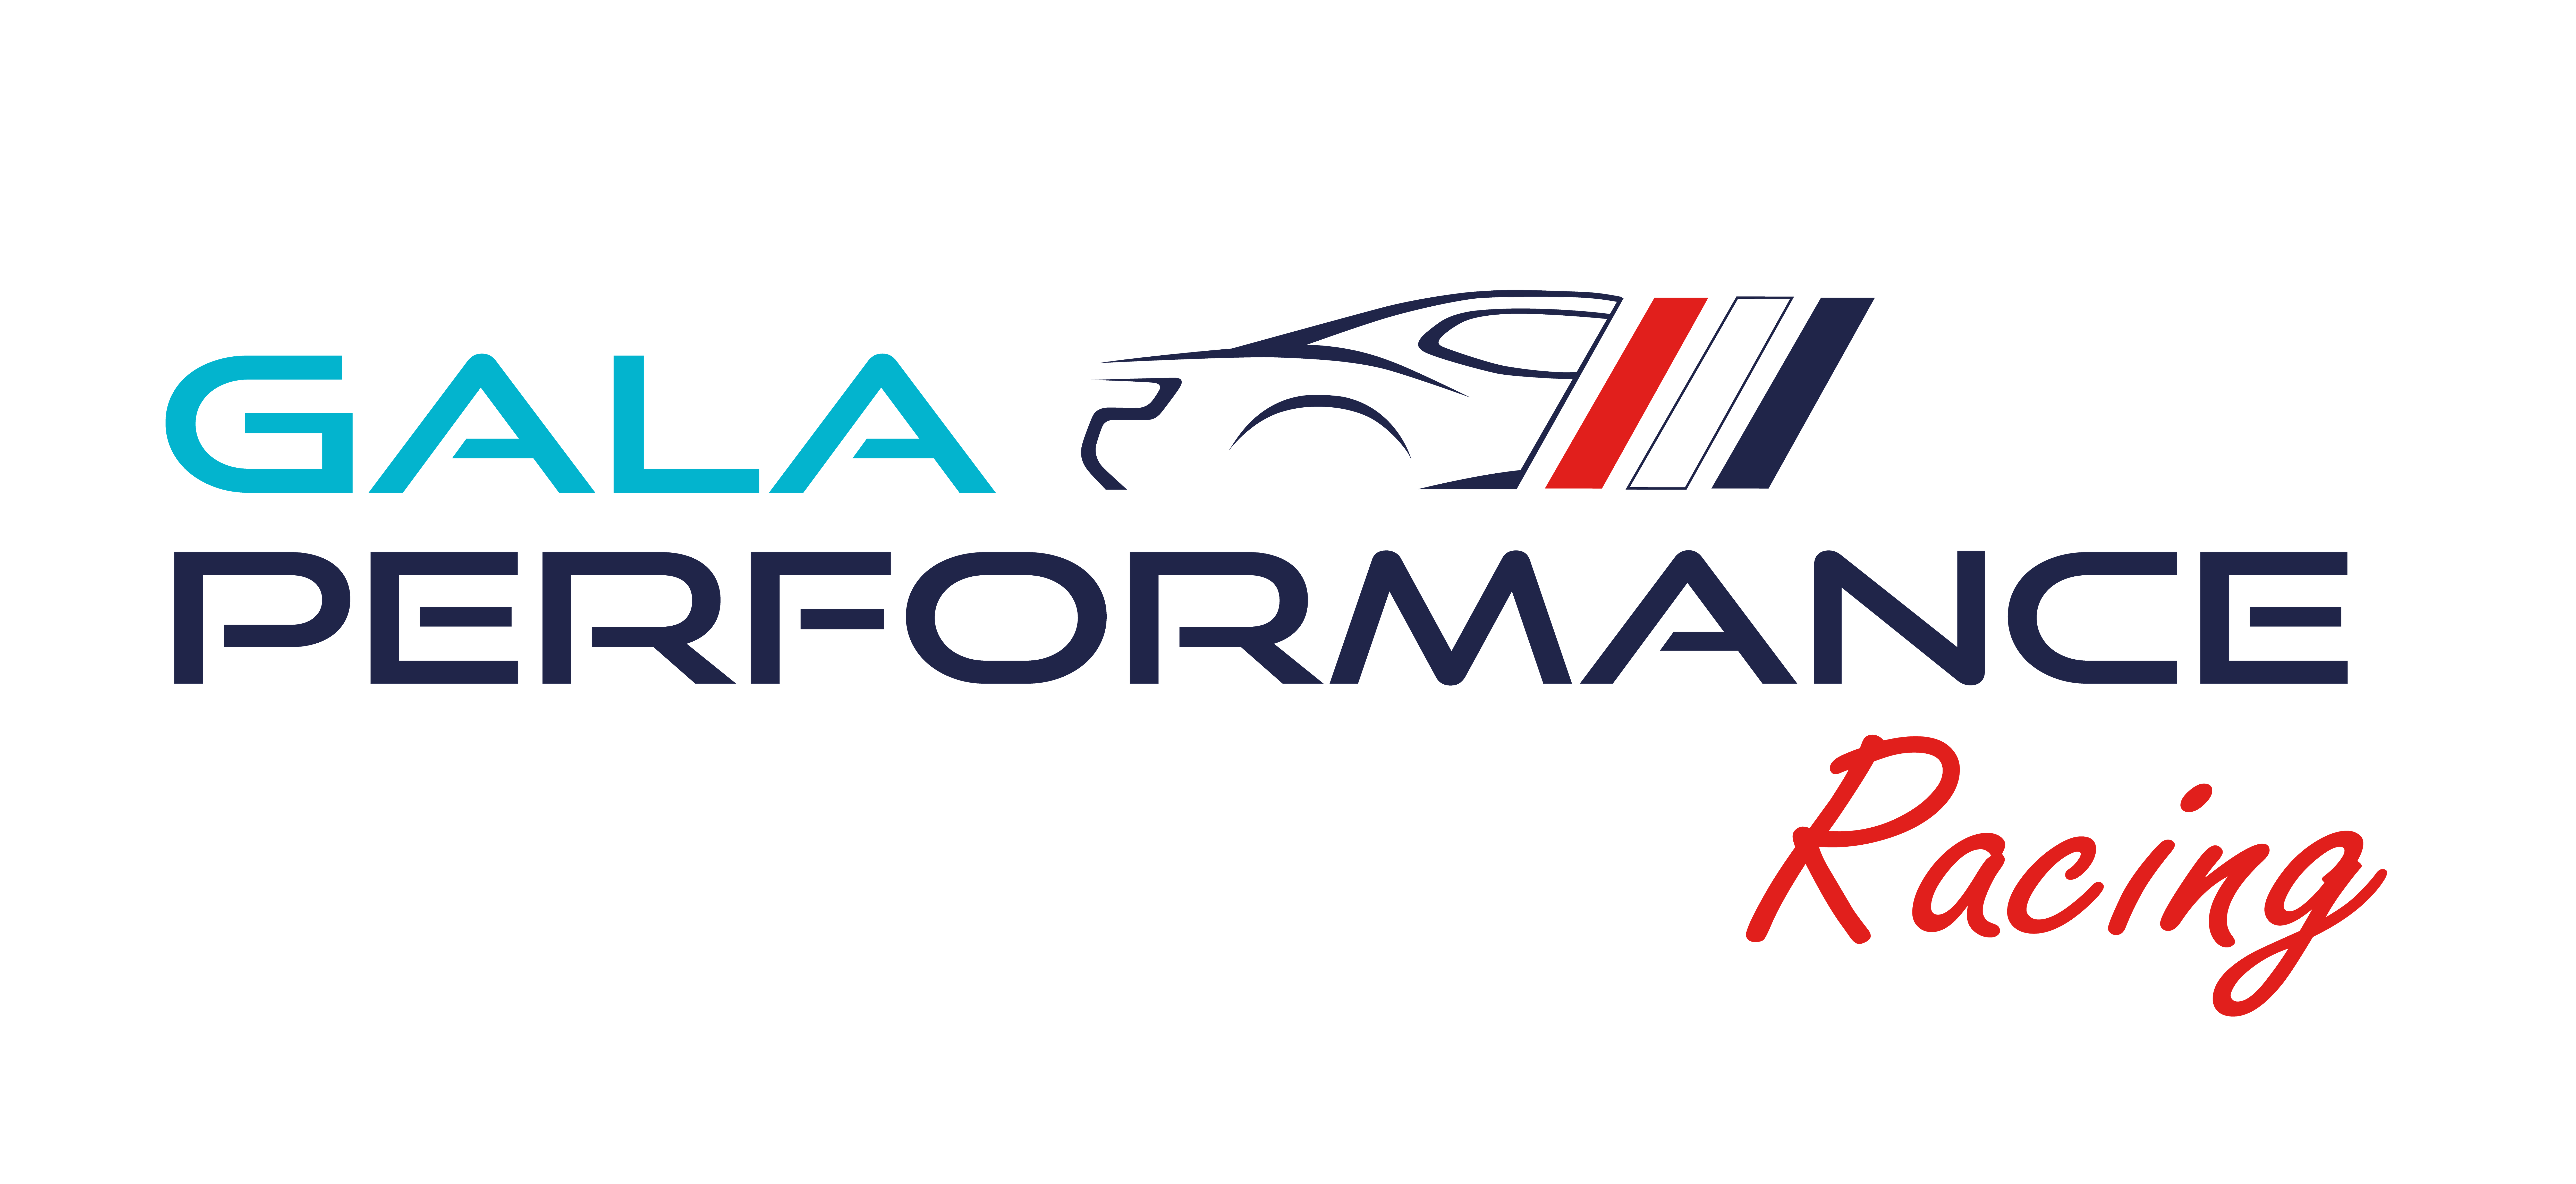 Gala Performance Racing